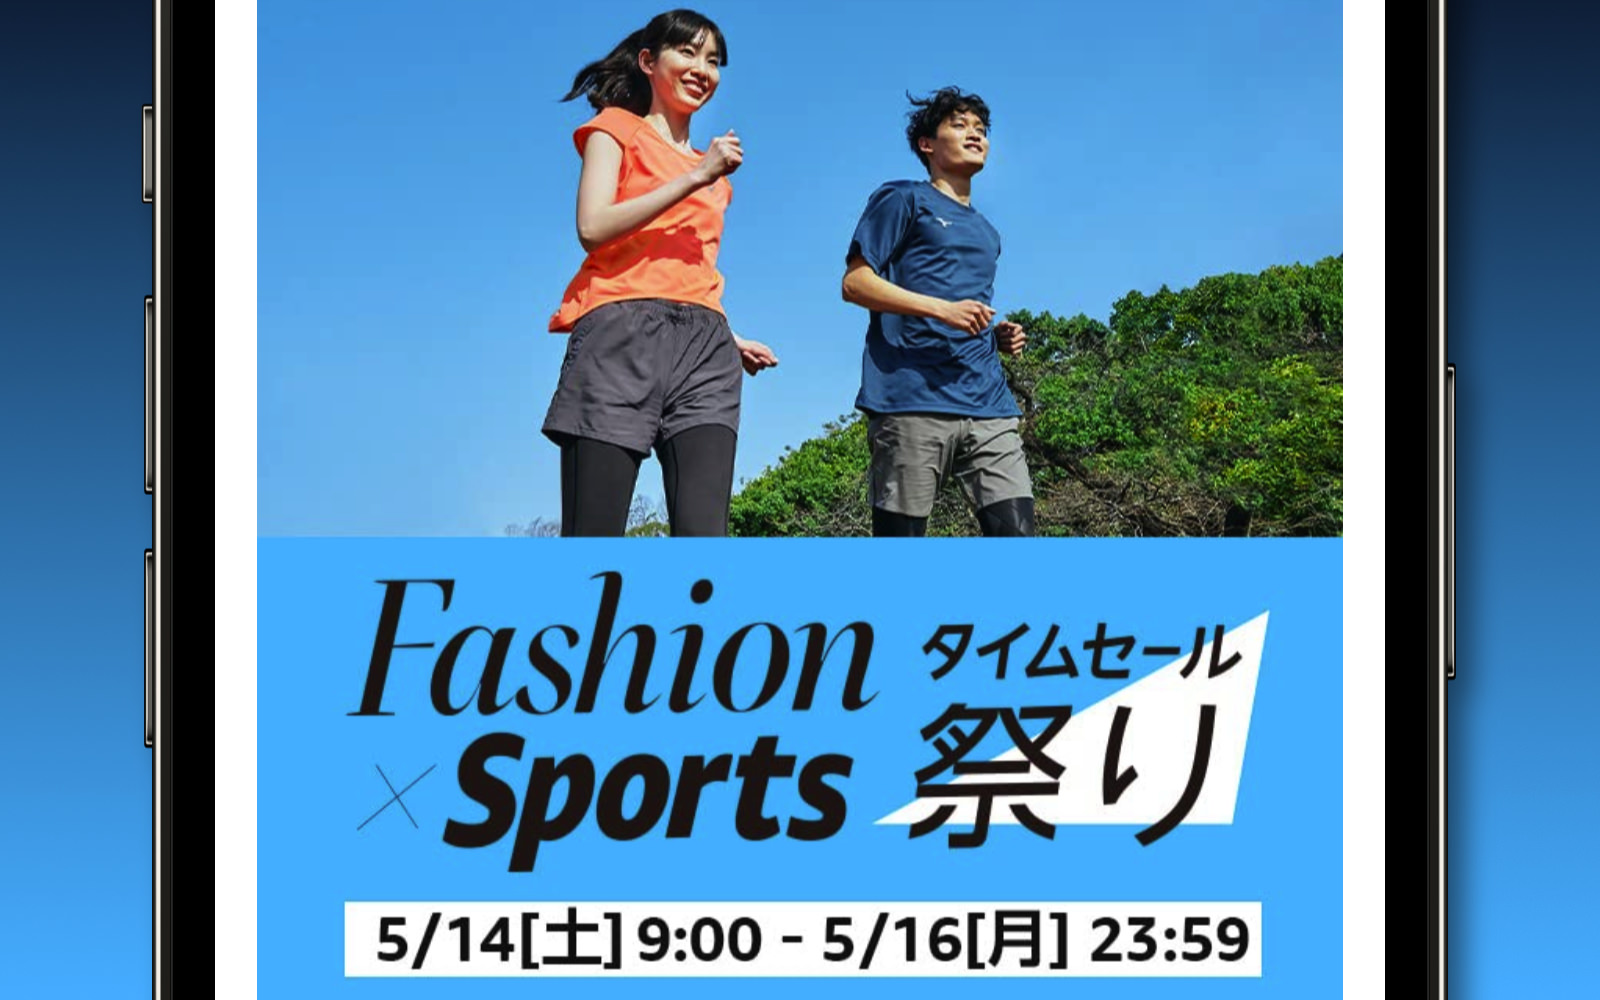 Fashion and Sports Amazon Sale